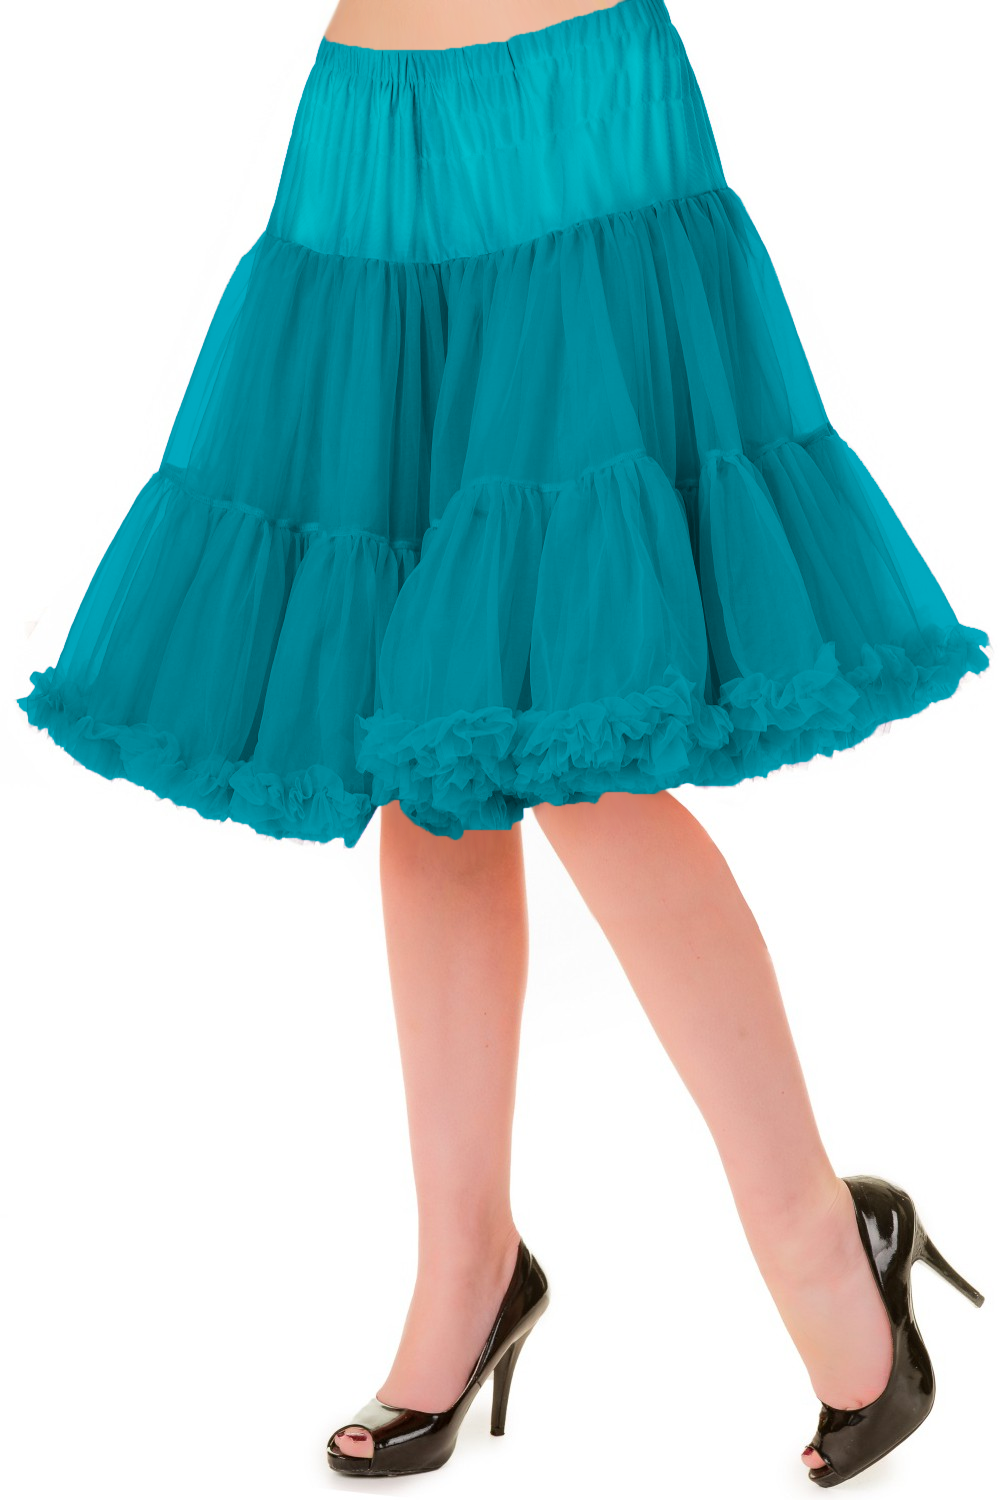 Walkabout Petticoat in Emerald - Natasha Marie Clothing